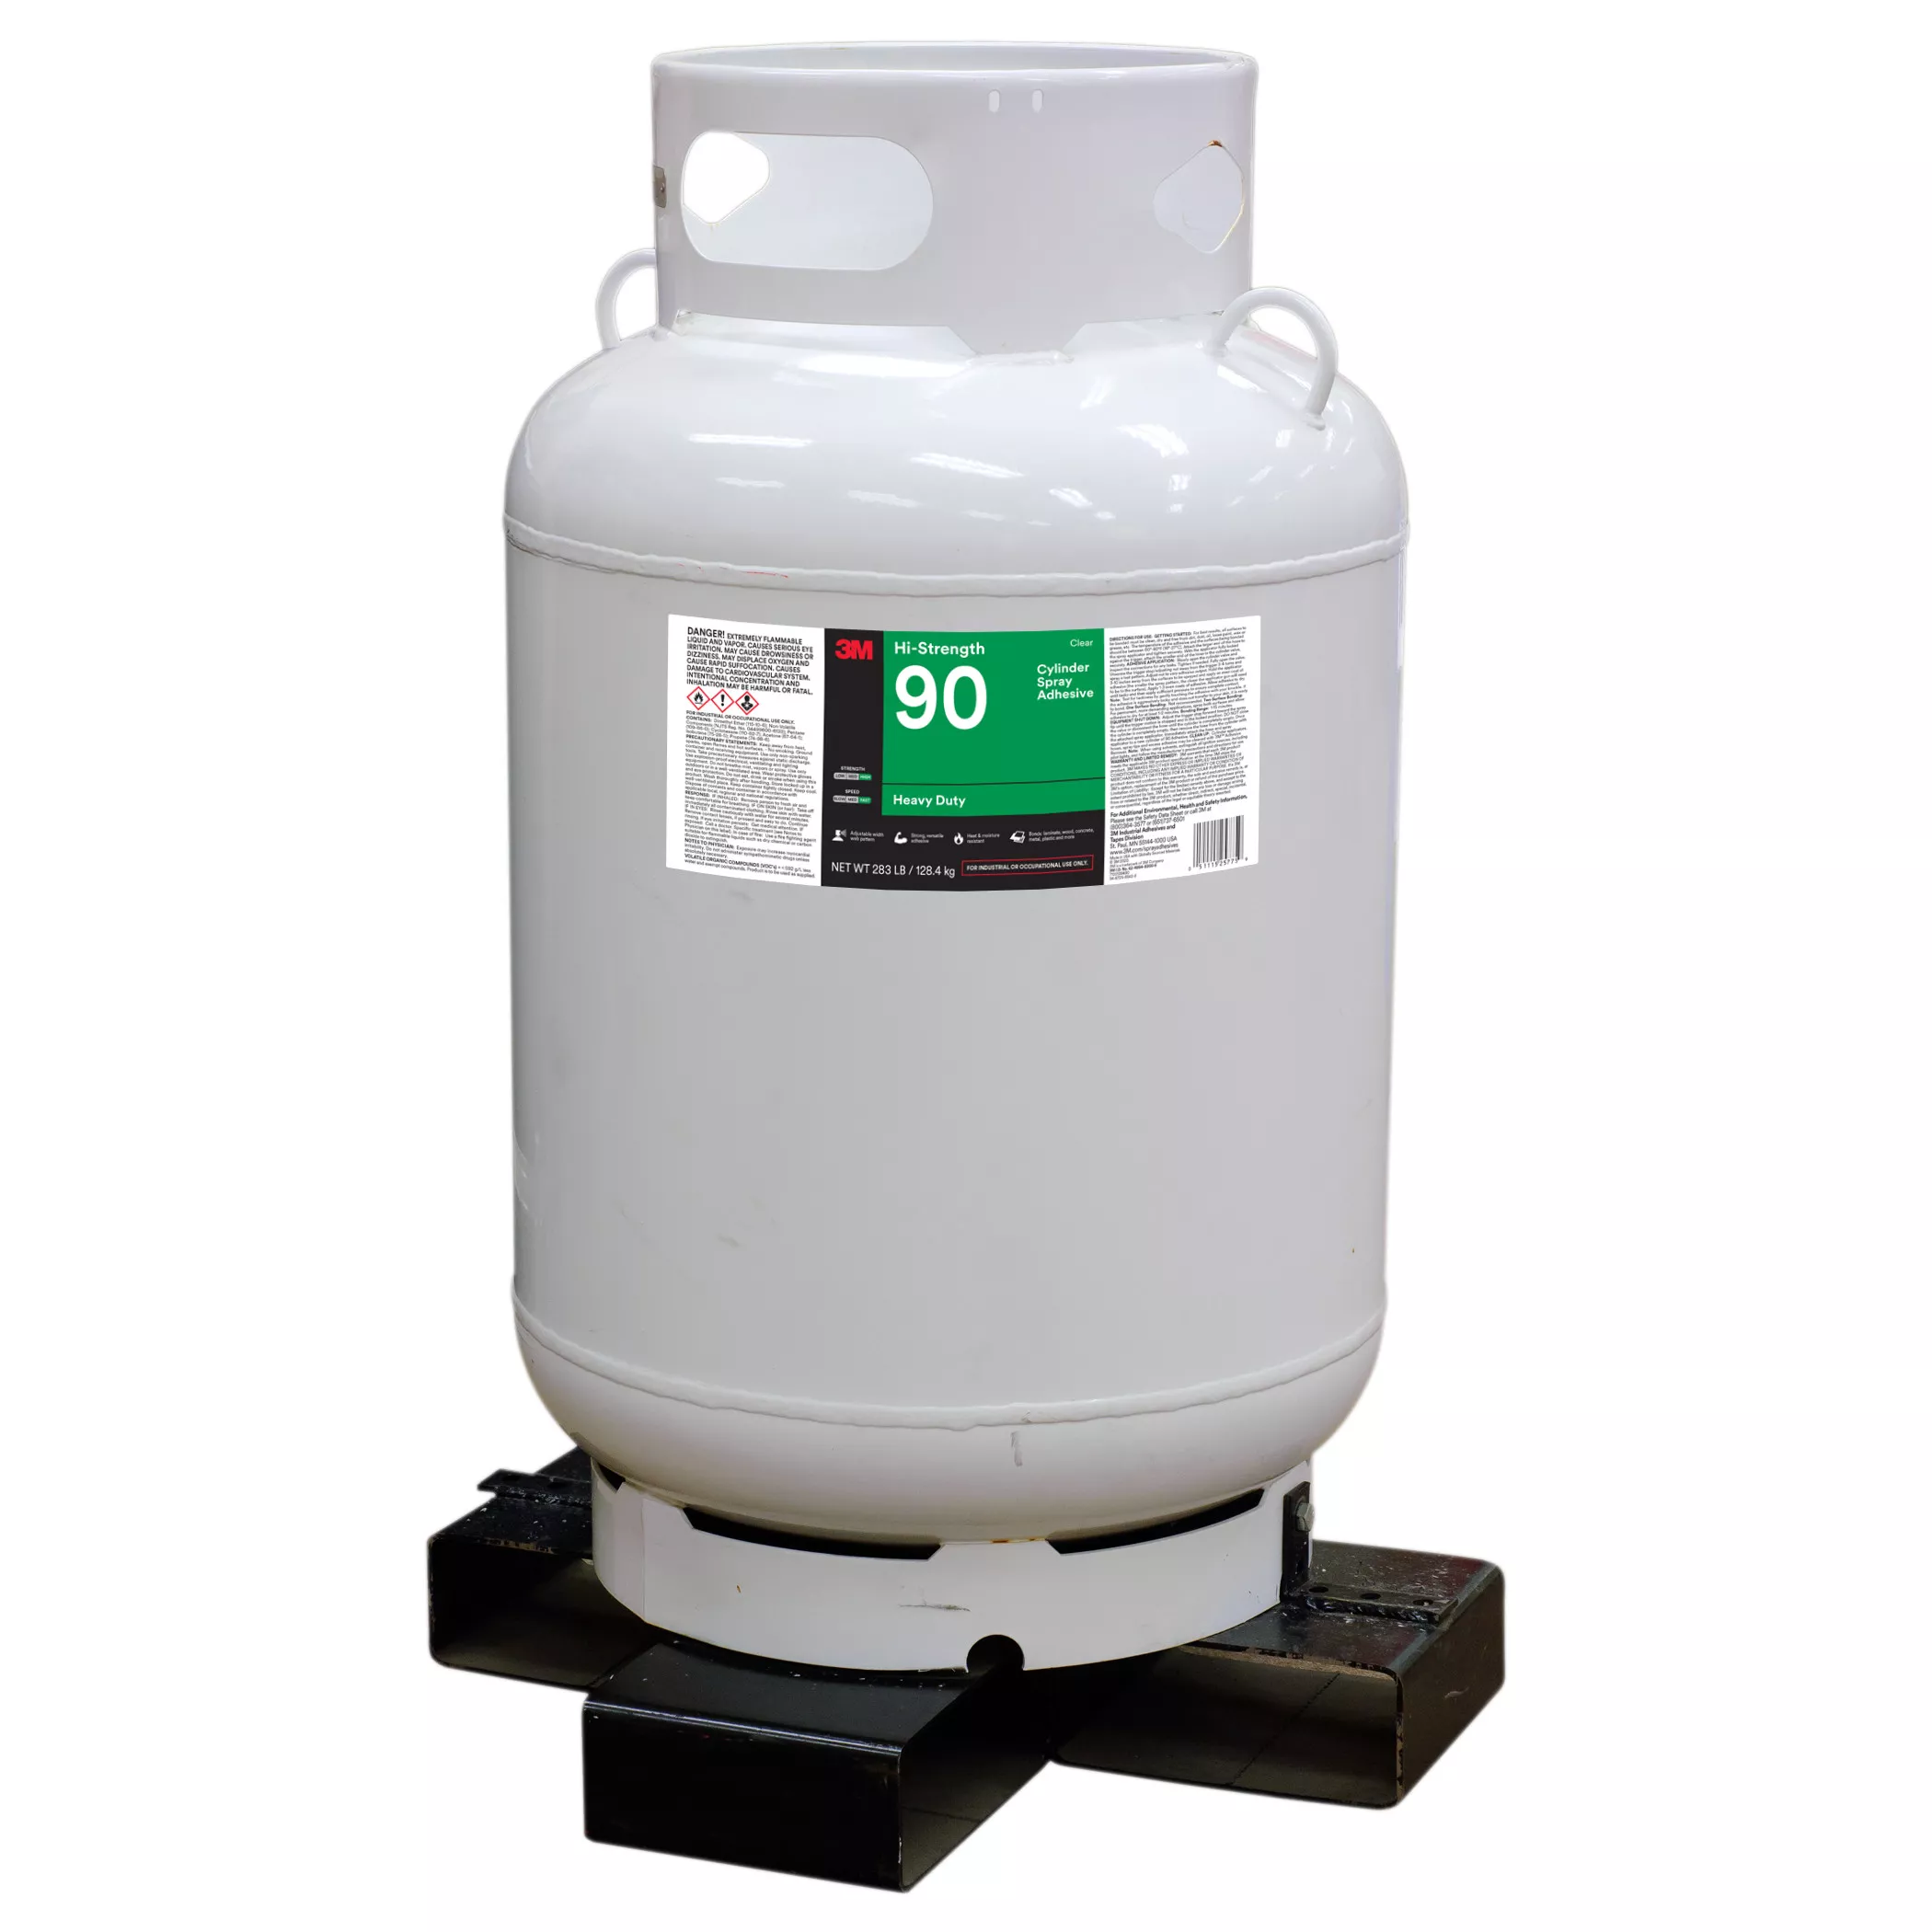 3M™ Hi-Strength 90, Cylinder Spray Adhesive, Clear, Jumbo (Net Wt 283.2
lb), 1/Cylinder